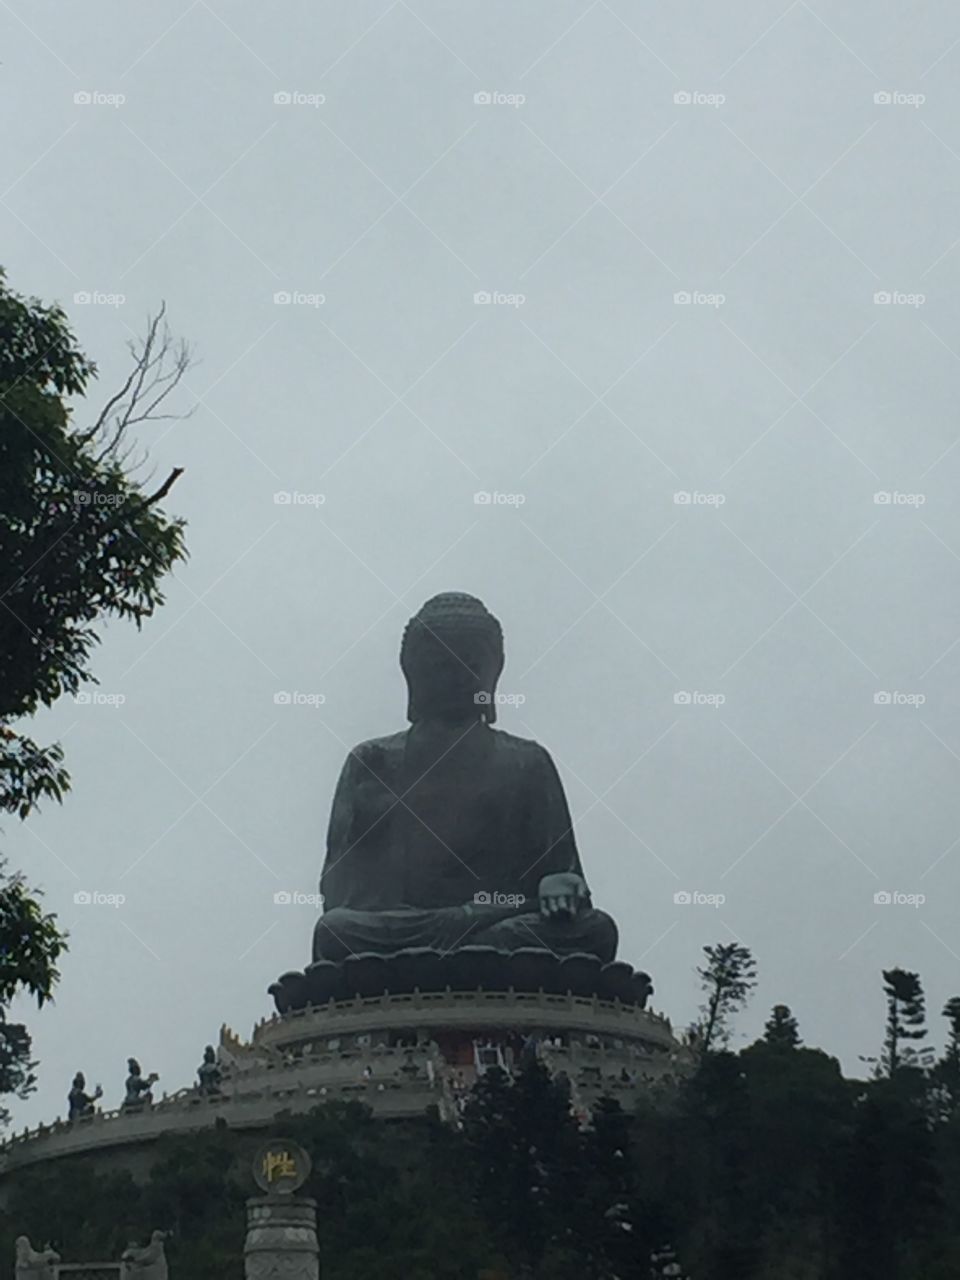 “Buddha in Peace, Harmony and One with Nature & Creation Ngong Ping, Lantau Island, Hong Kong. Copyright Chelsea Merkley Photography 2019.”